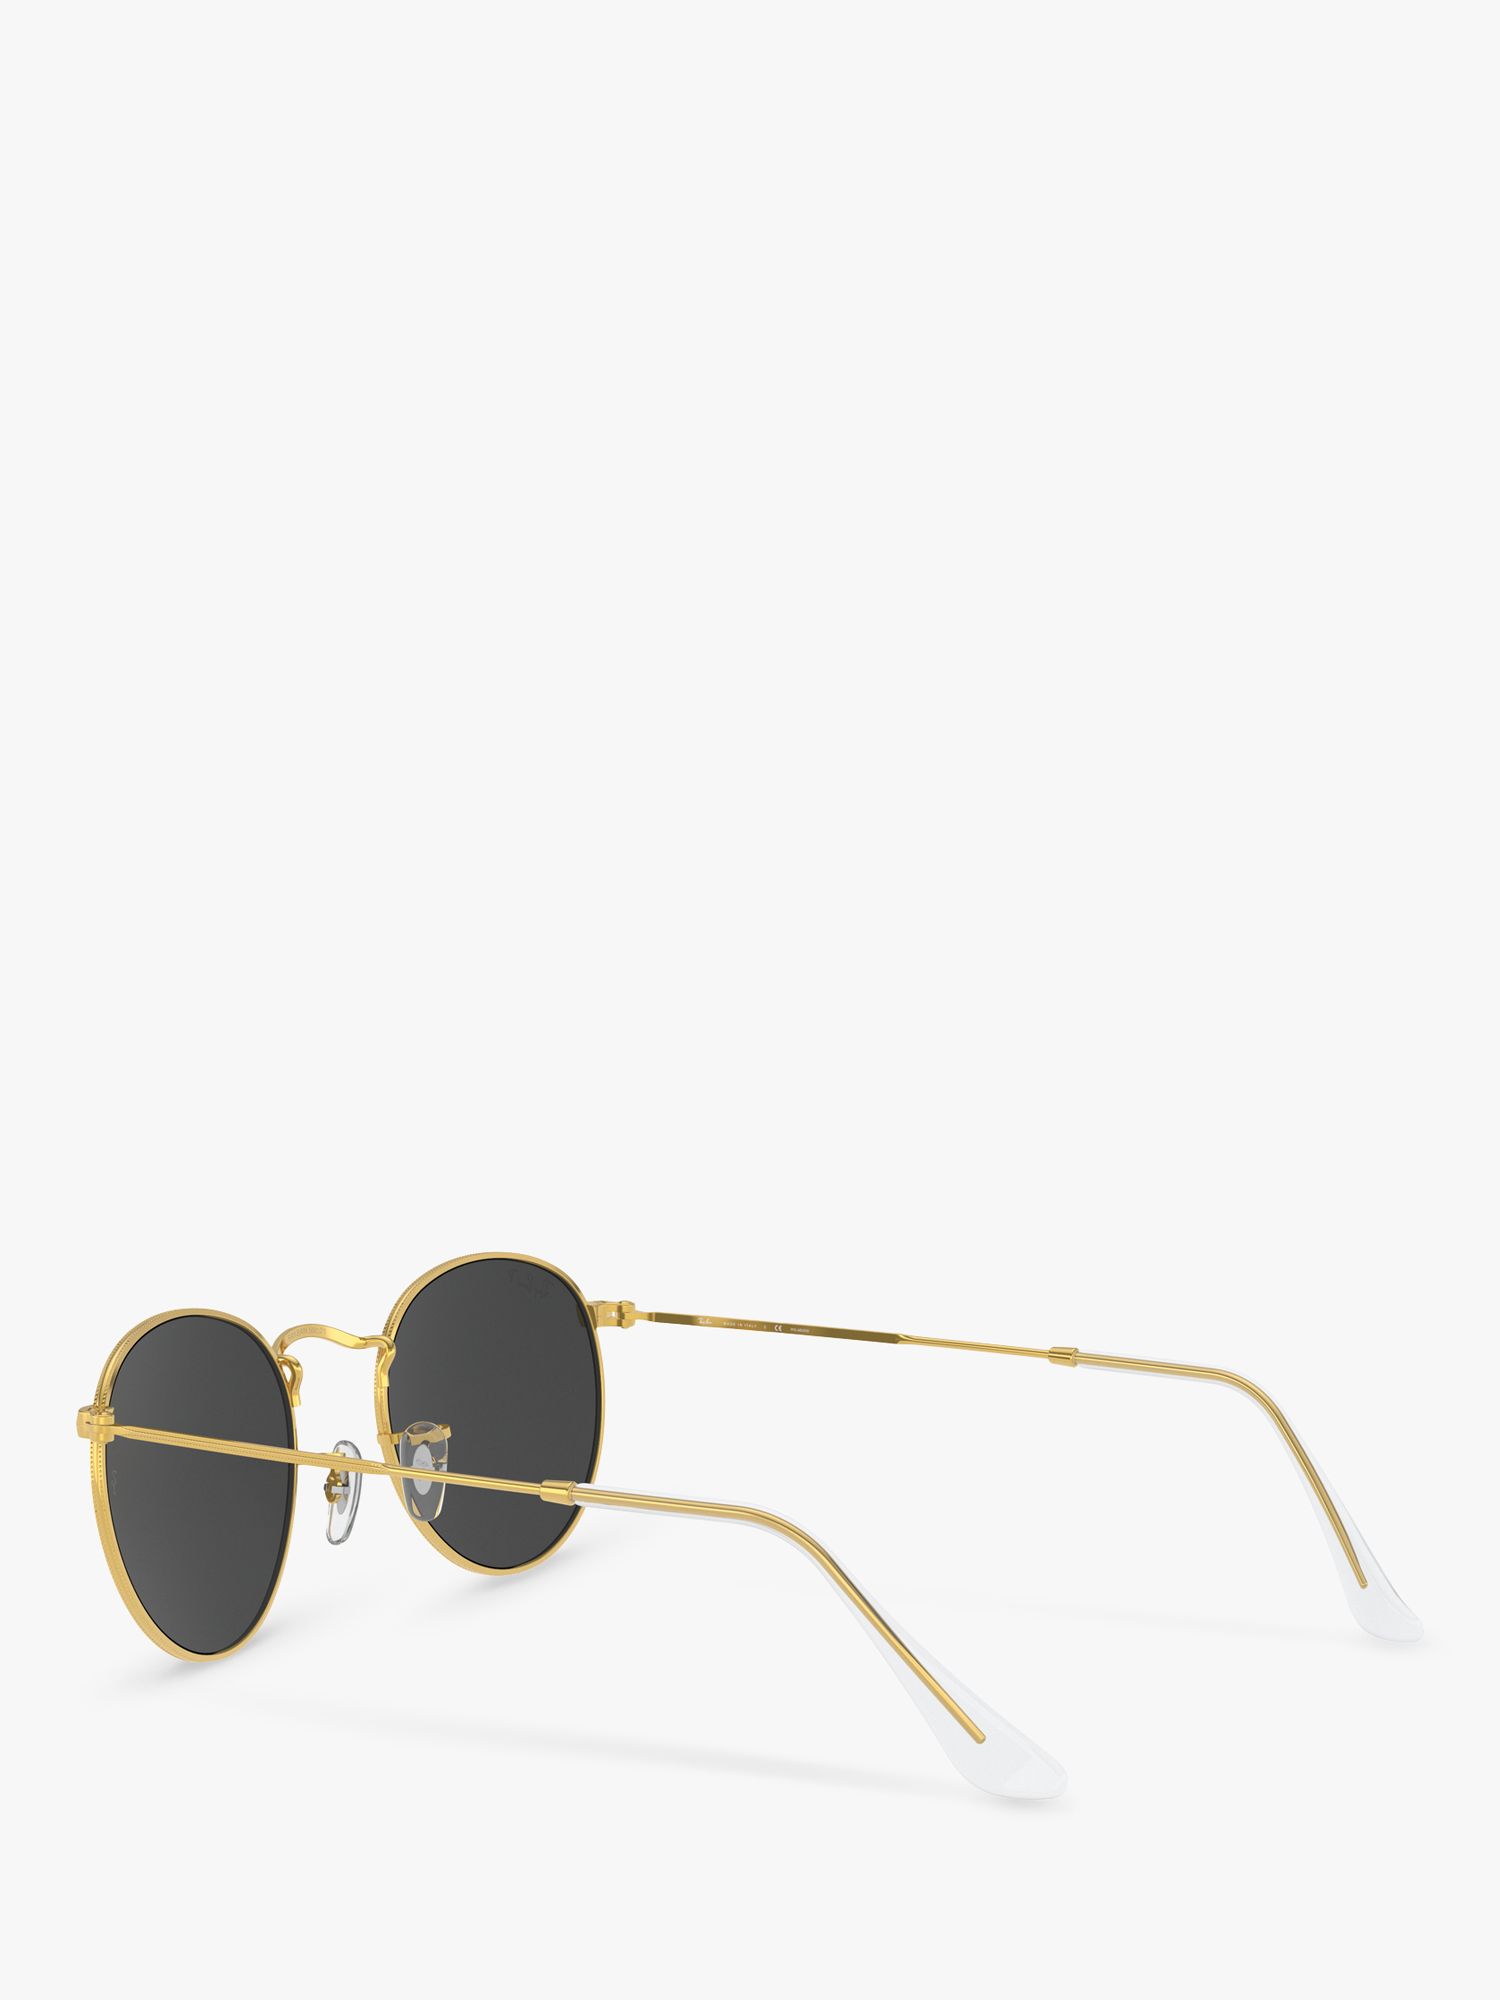 Buy Ray-Ban RB3447 Men's Polarised Round Metal Sunglasses, Gold/Black Online at johnlewis.com